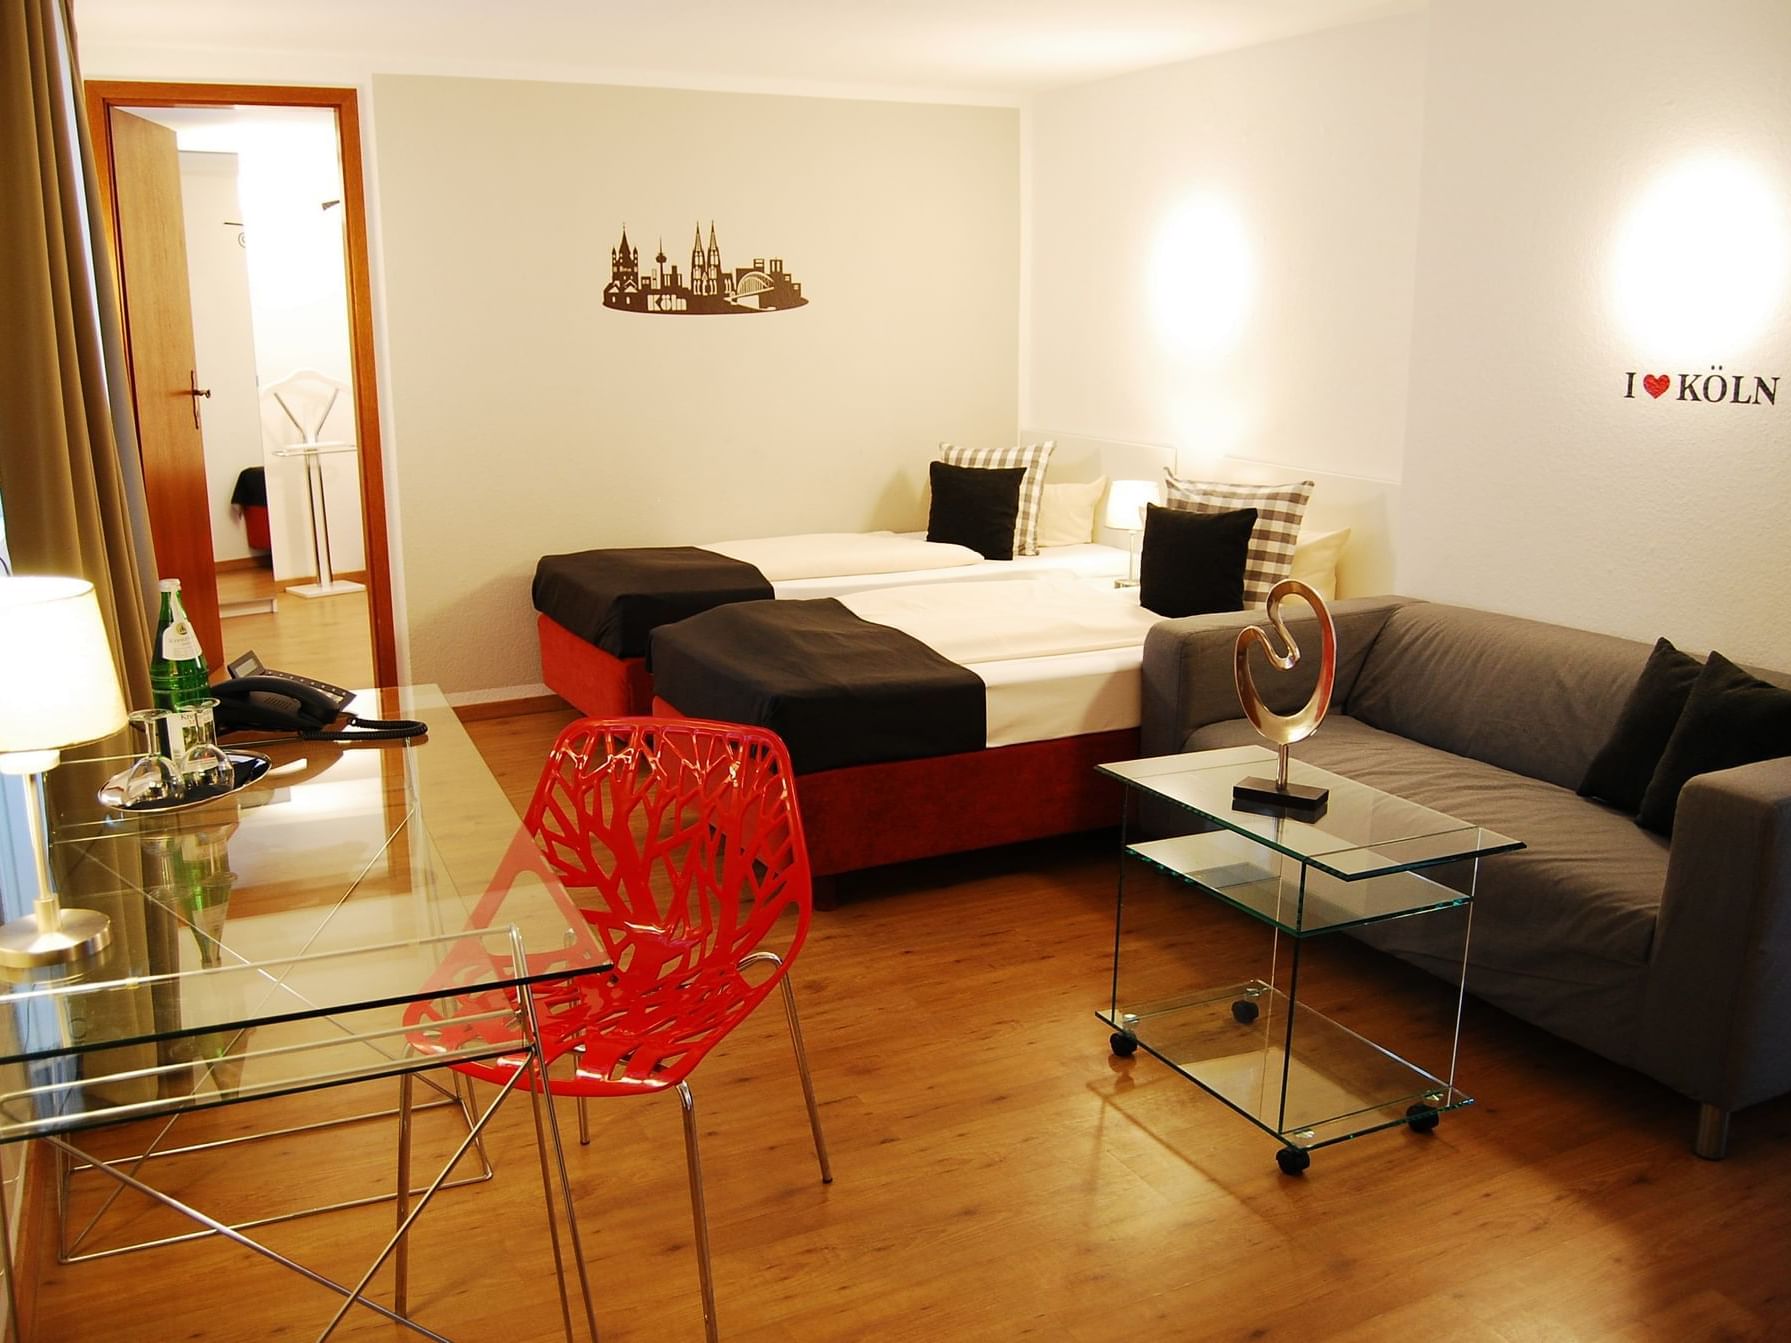 Living area and bedroom in the Studio at Rheinland Hotel Kollektion